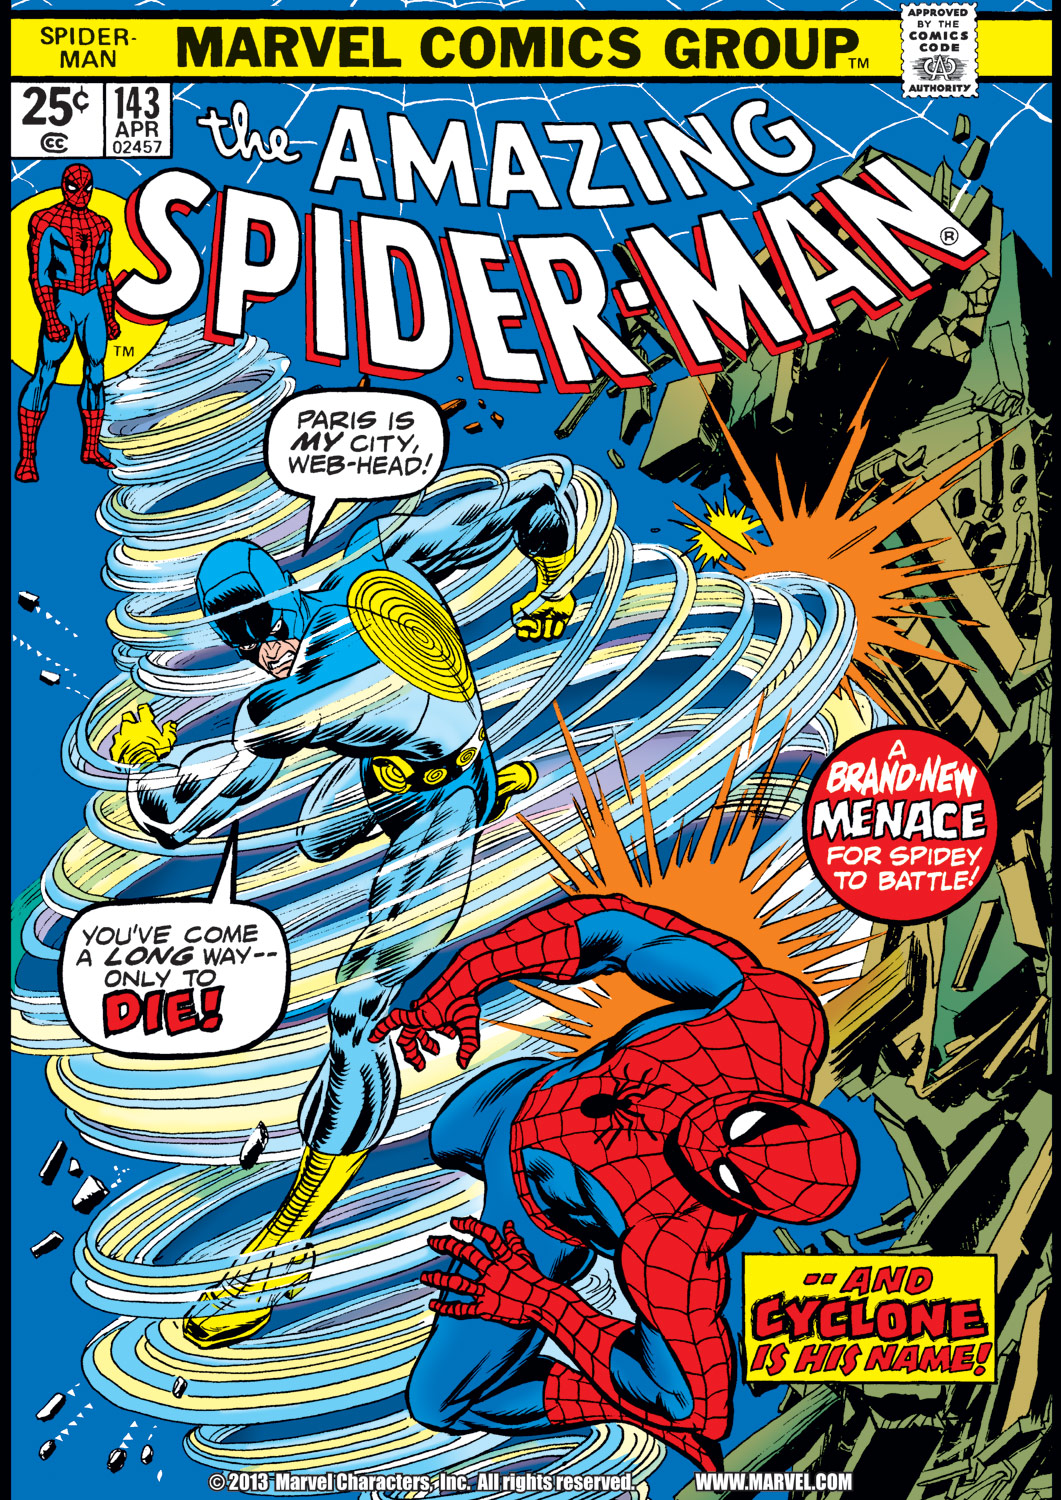 The Amazing Spider-Man (1963) #143